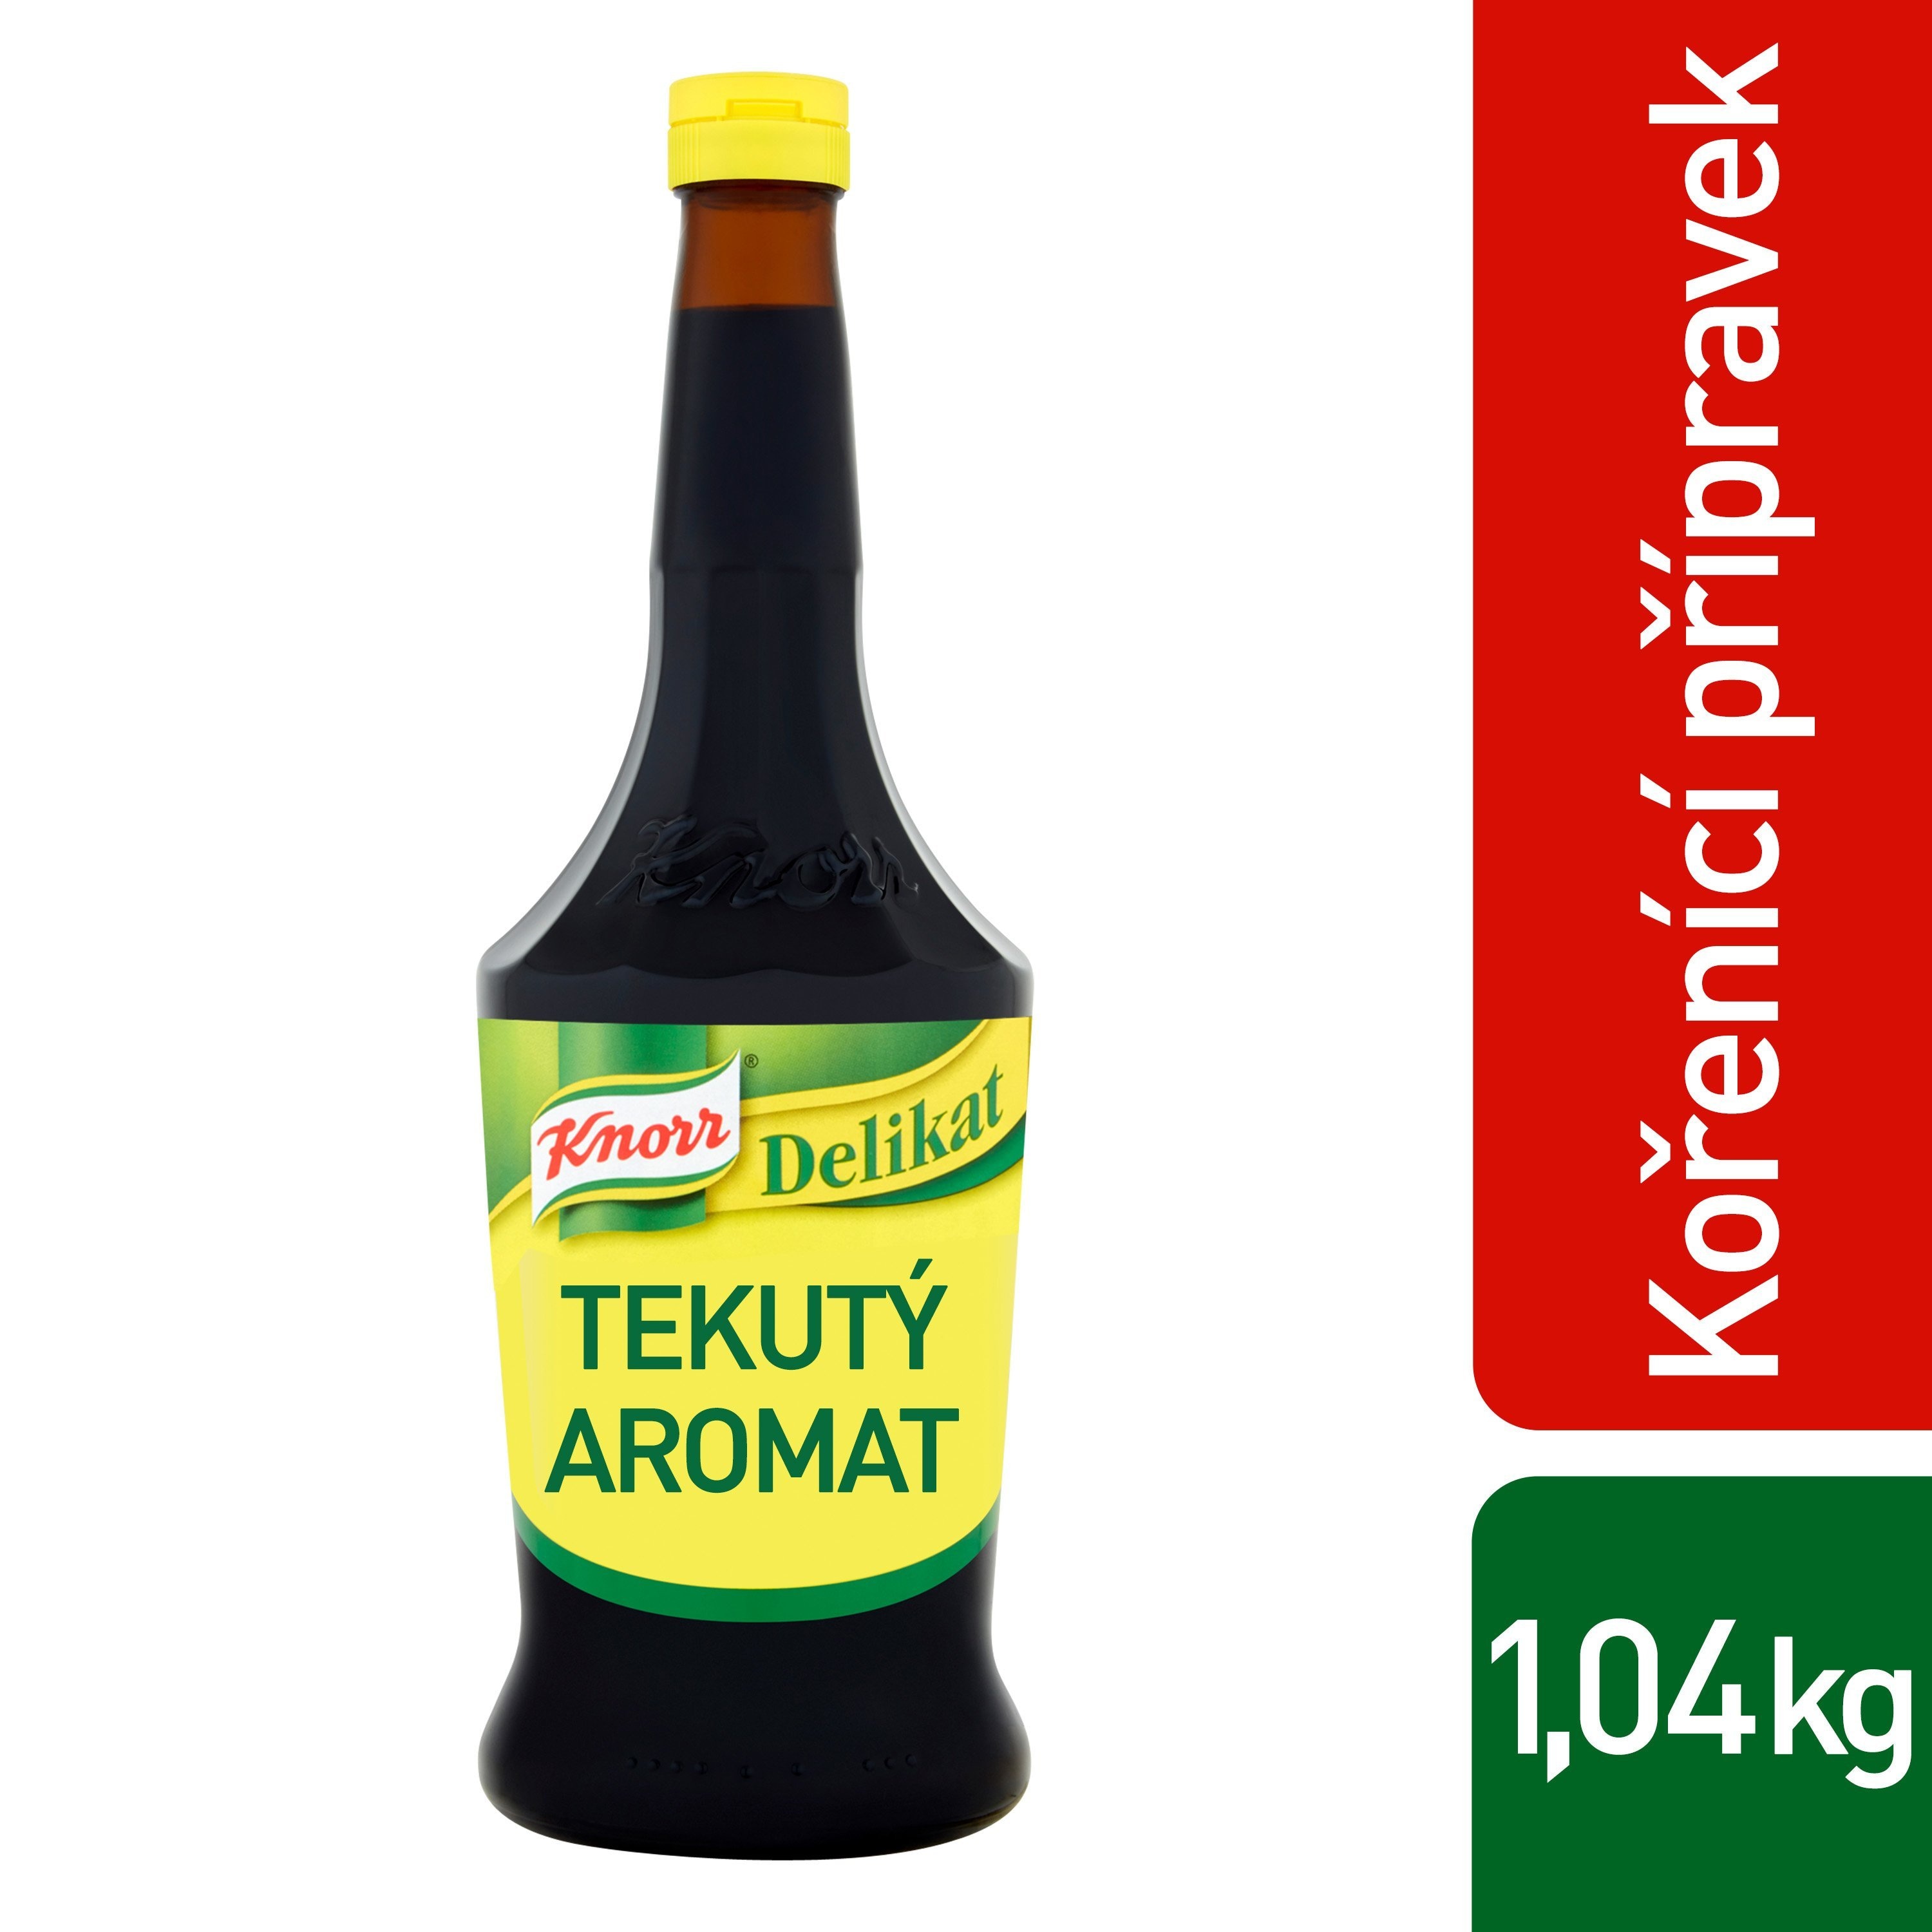 Knorr Tekutý Aromat 1,04 kg - 